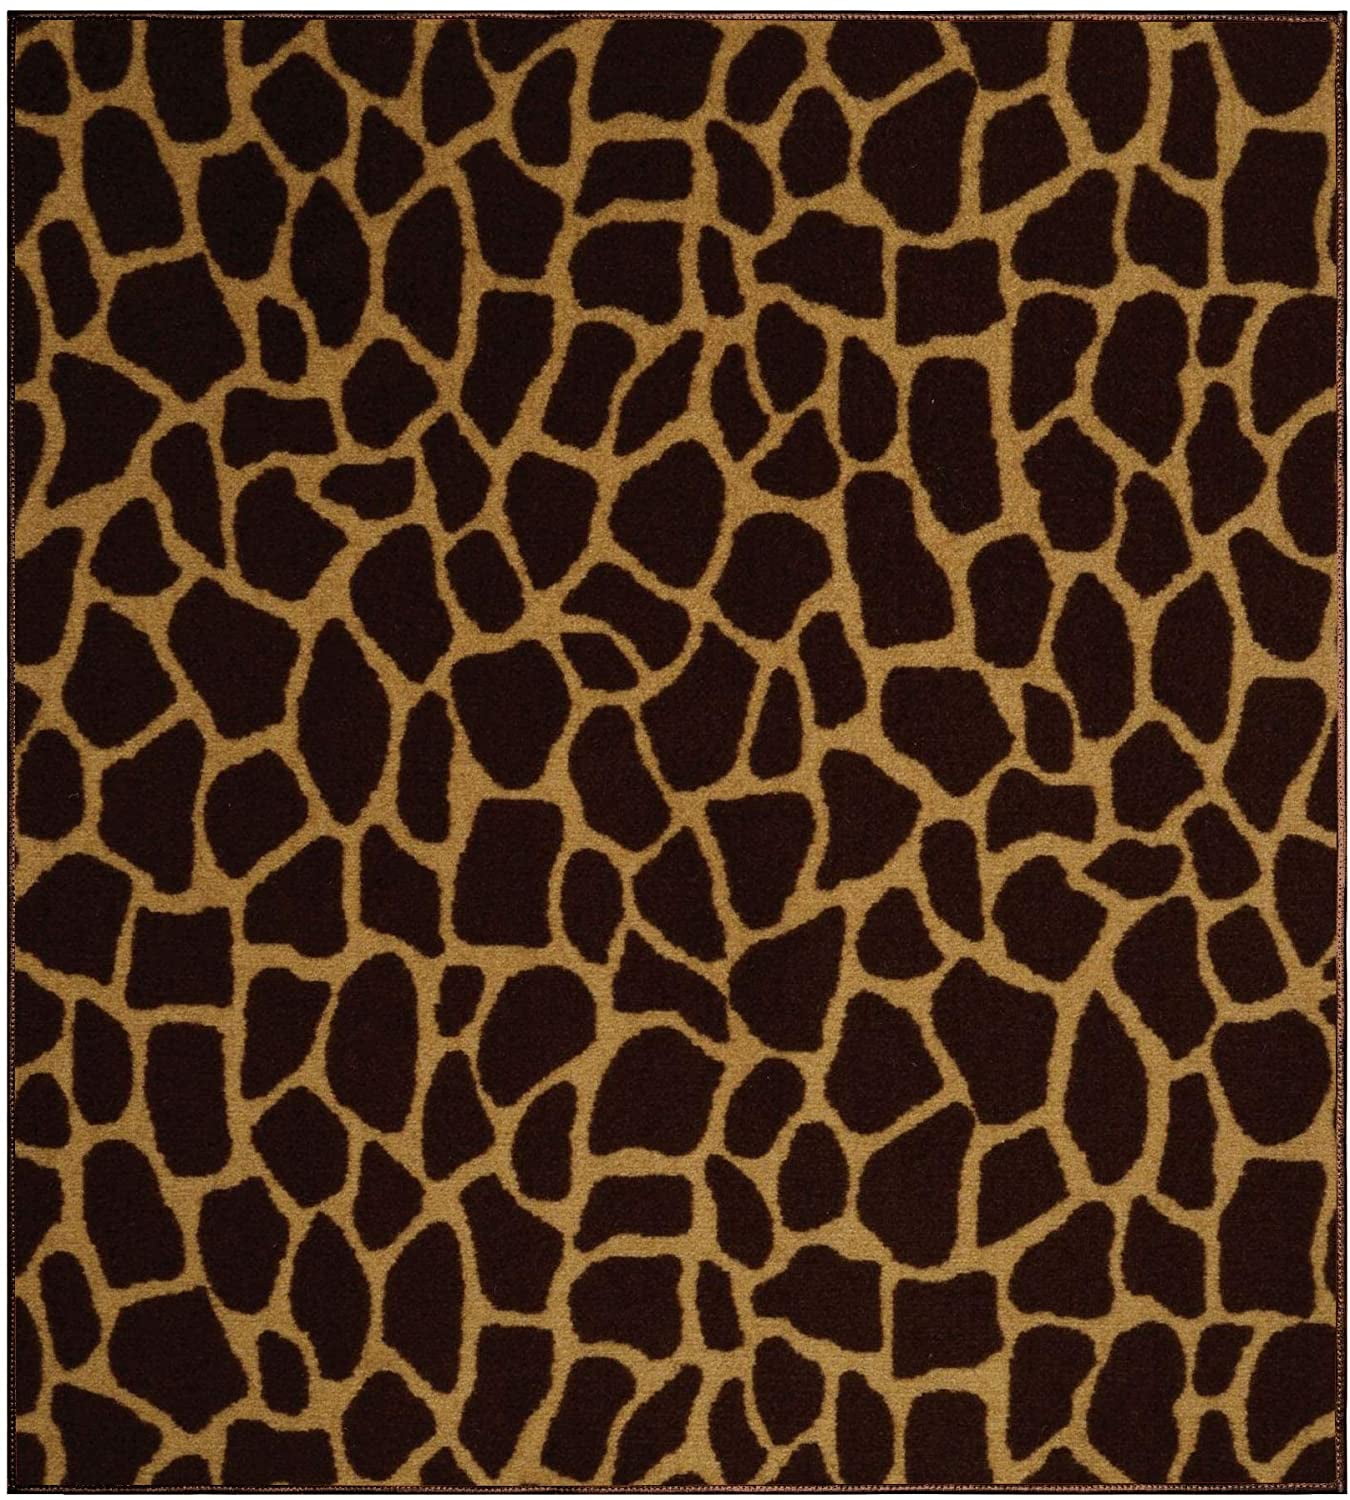 Giraffe Animal-Print Area Rug for Living Room Kitchen Kids Bedroom Made In USA Dining Room